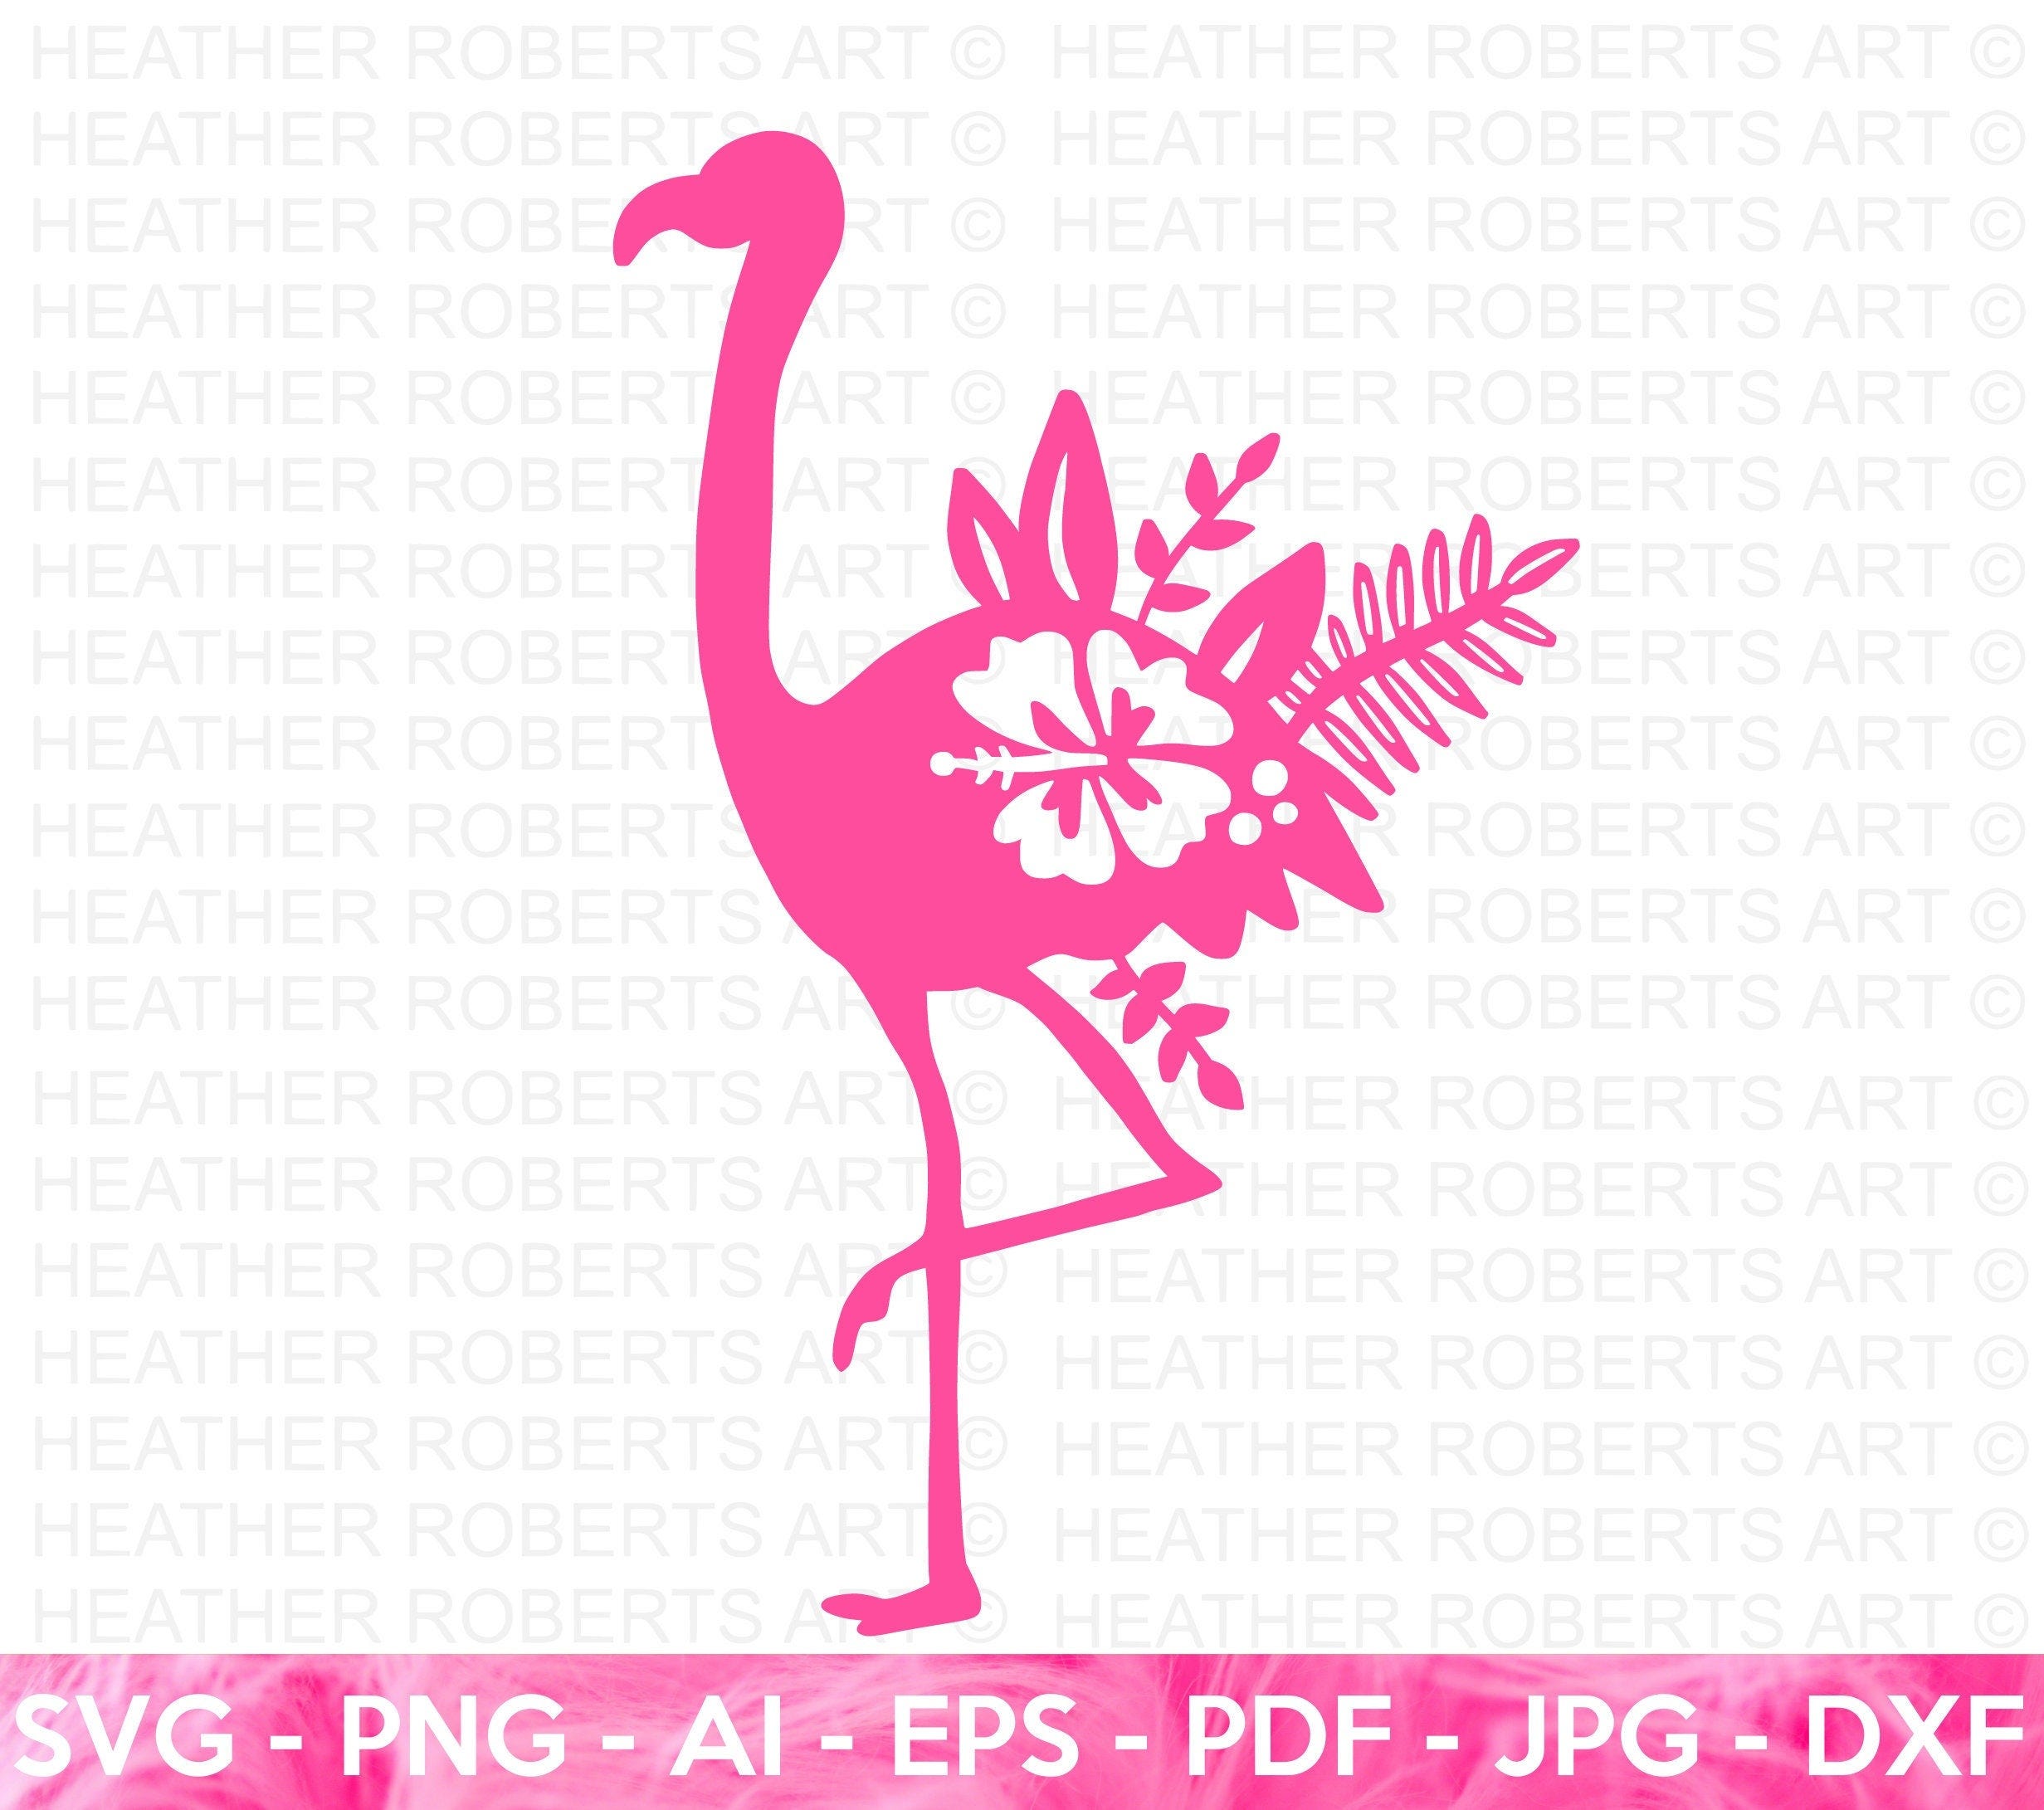 Floral Flamingo SVG,  Flamingo Cutting File, Floral Flamingo Clipart, Flamingo Decor, Cut File for Cricut, Silhouette